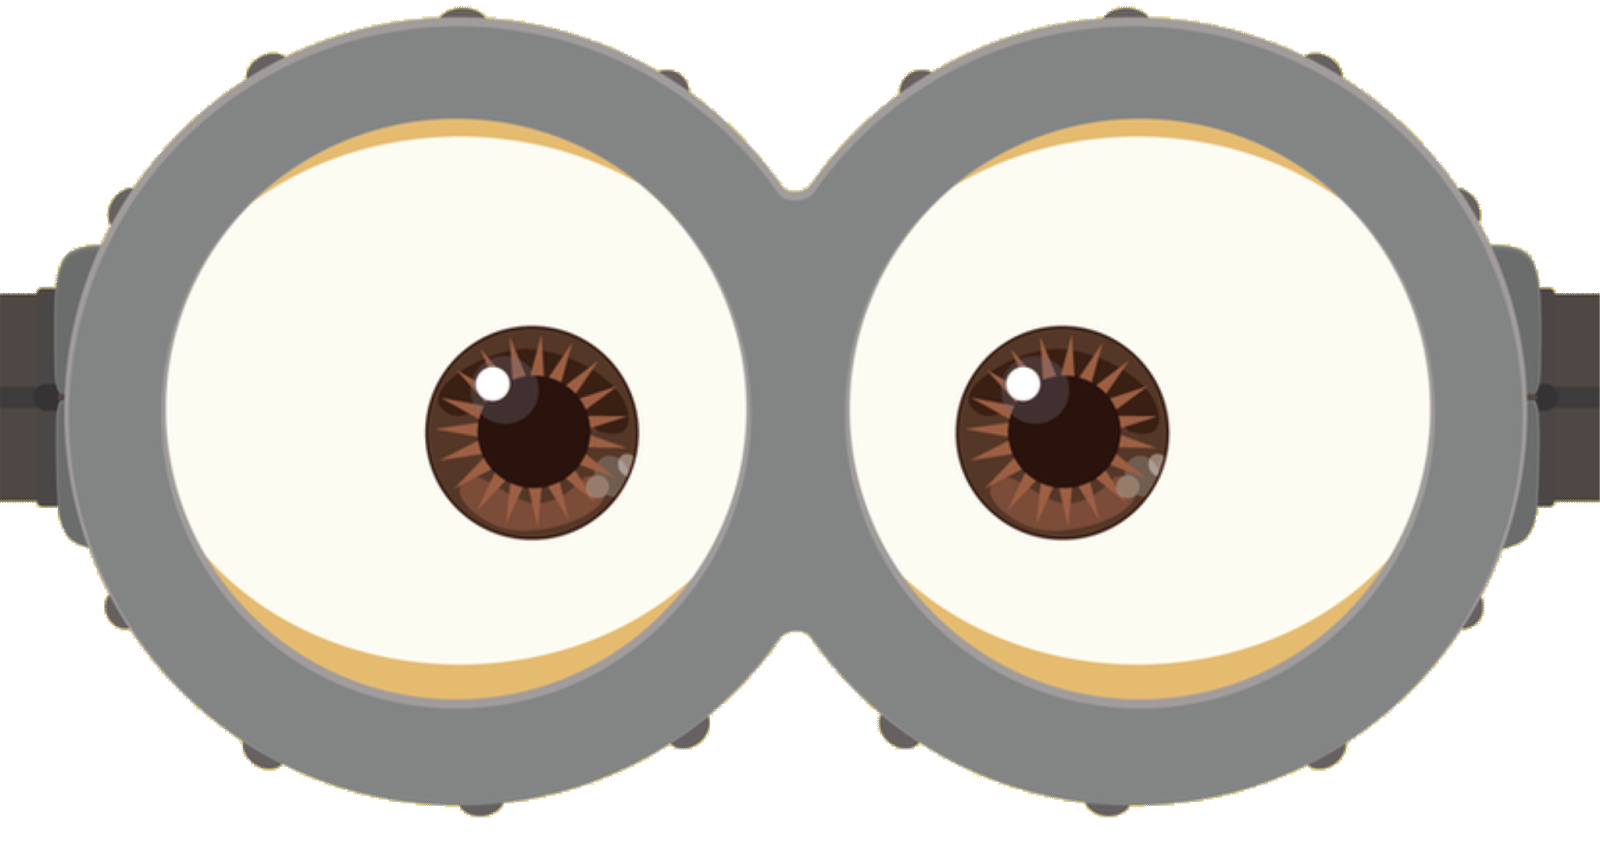 Minion clipart eye, Minion eye Transparent FREE for download on